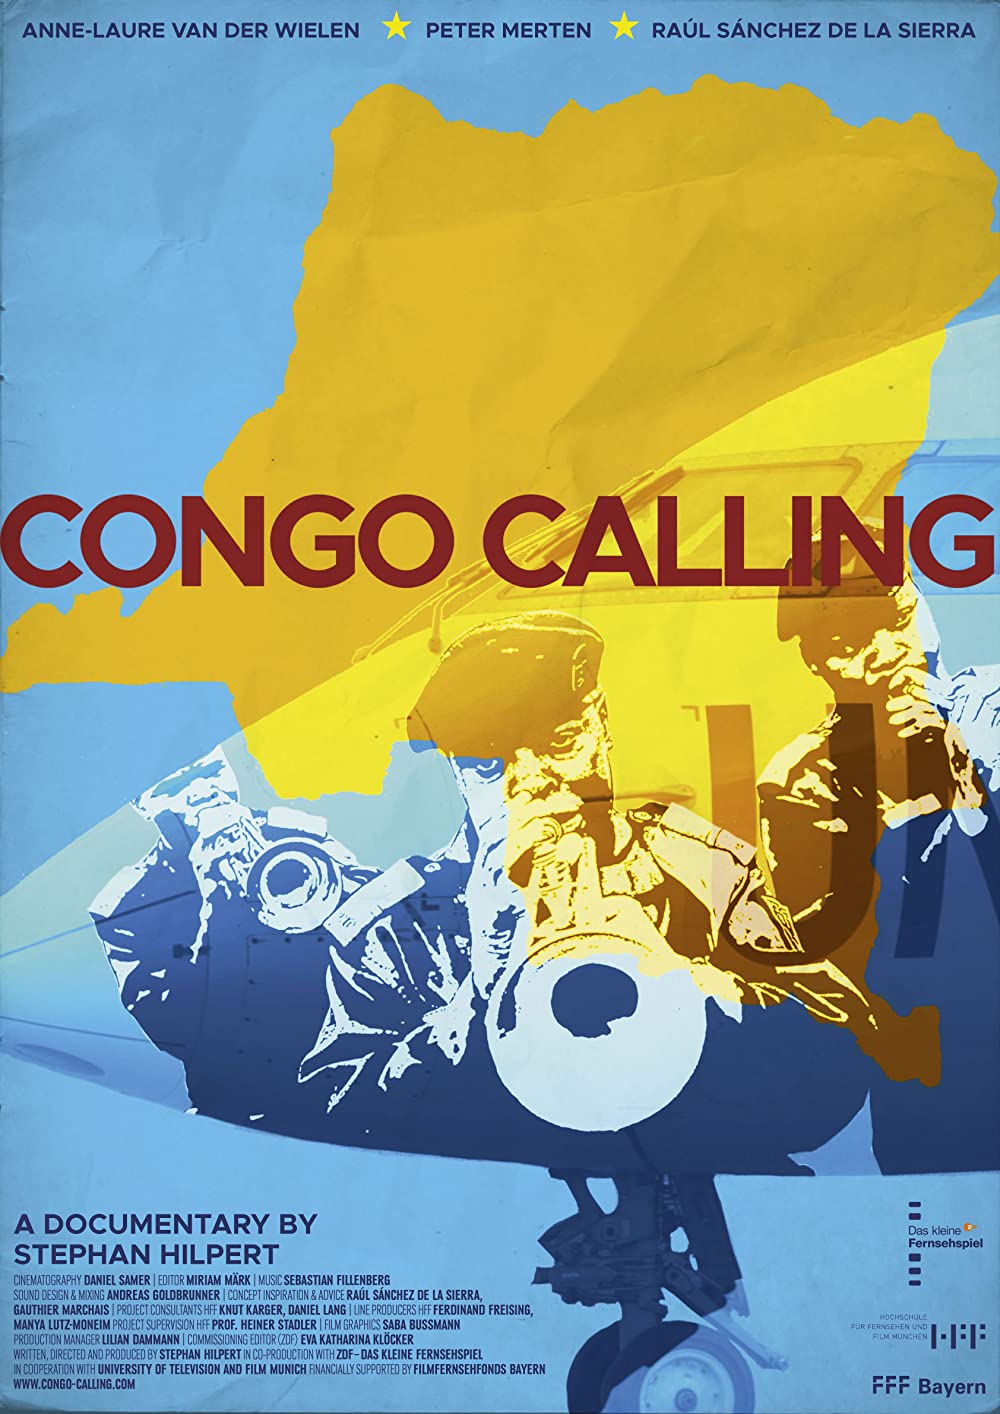 Filmbeschreibung zu Congo Calling